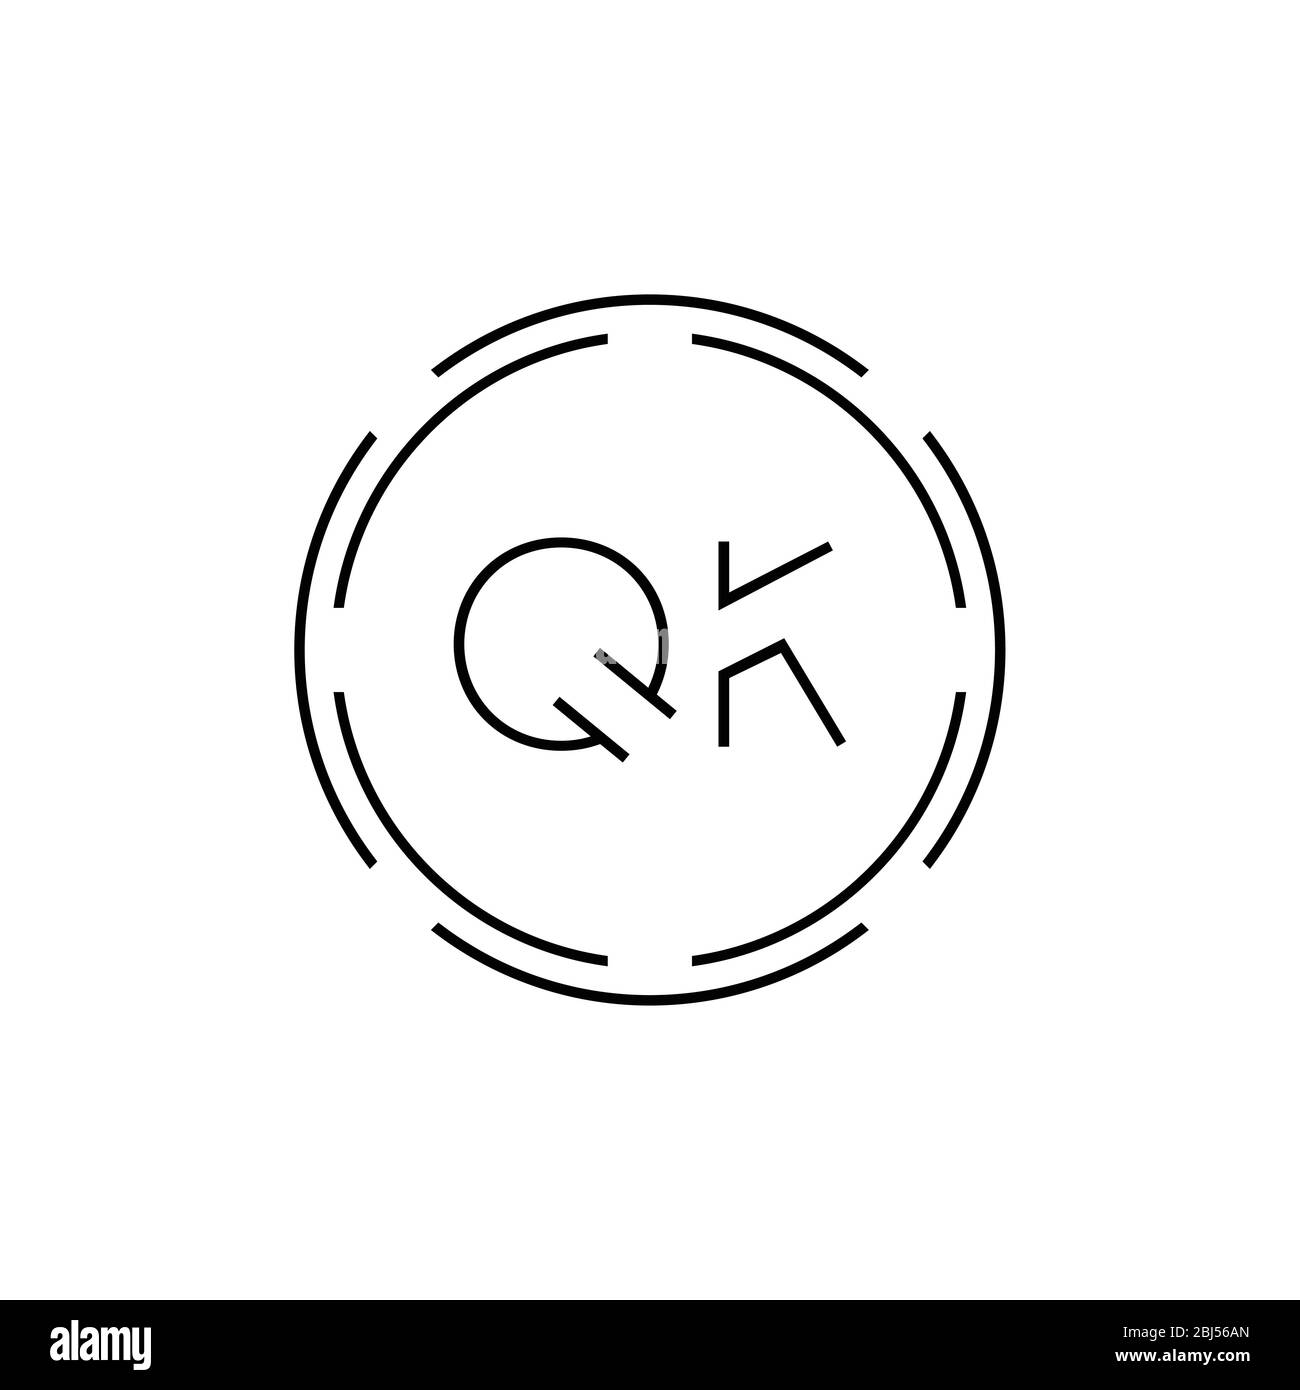 Initial Letter QK Logo Design Vector Template. Digital Abstract Circle QK Letter Logo Design Stock Vector